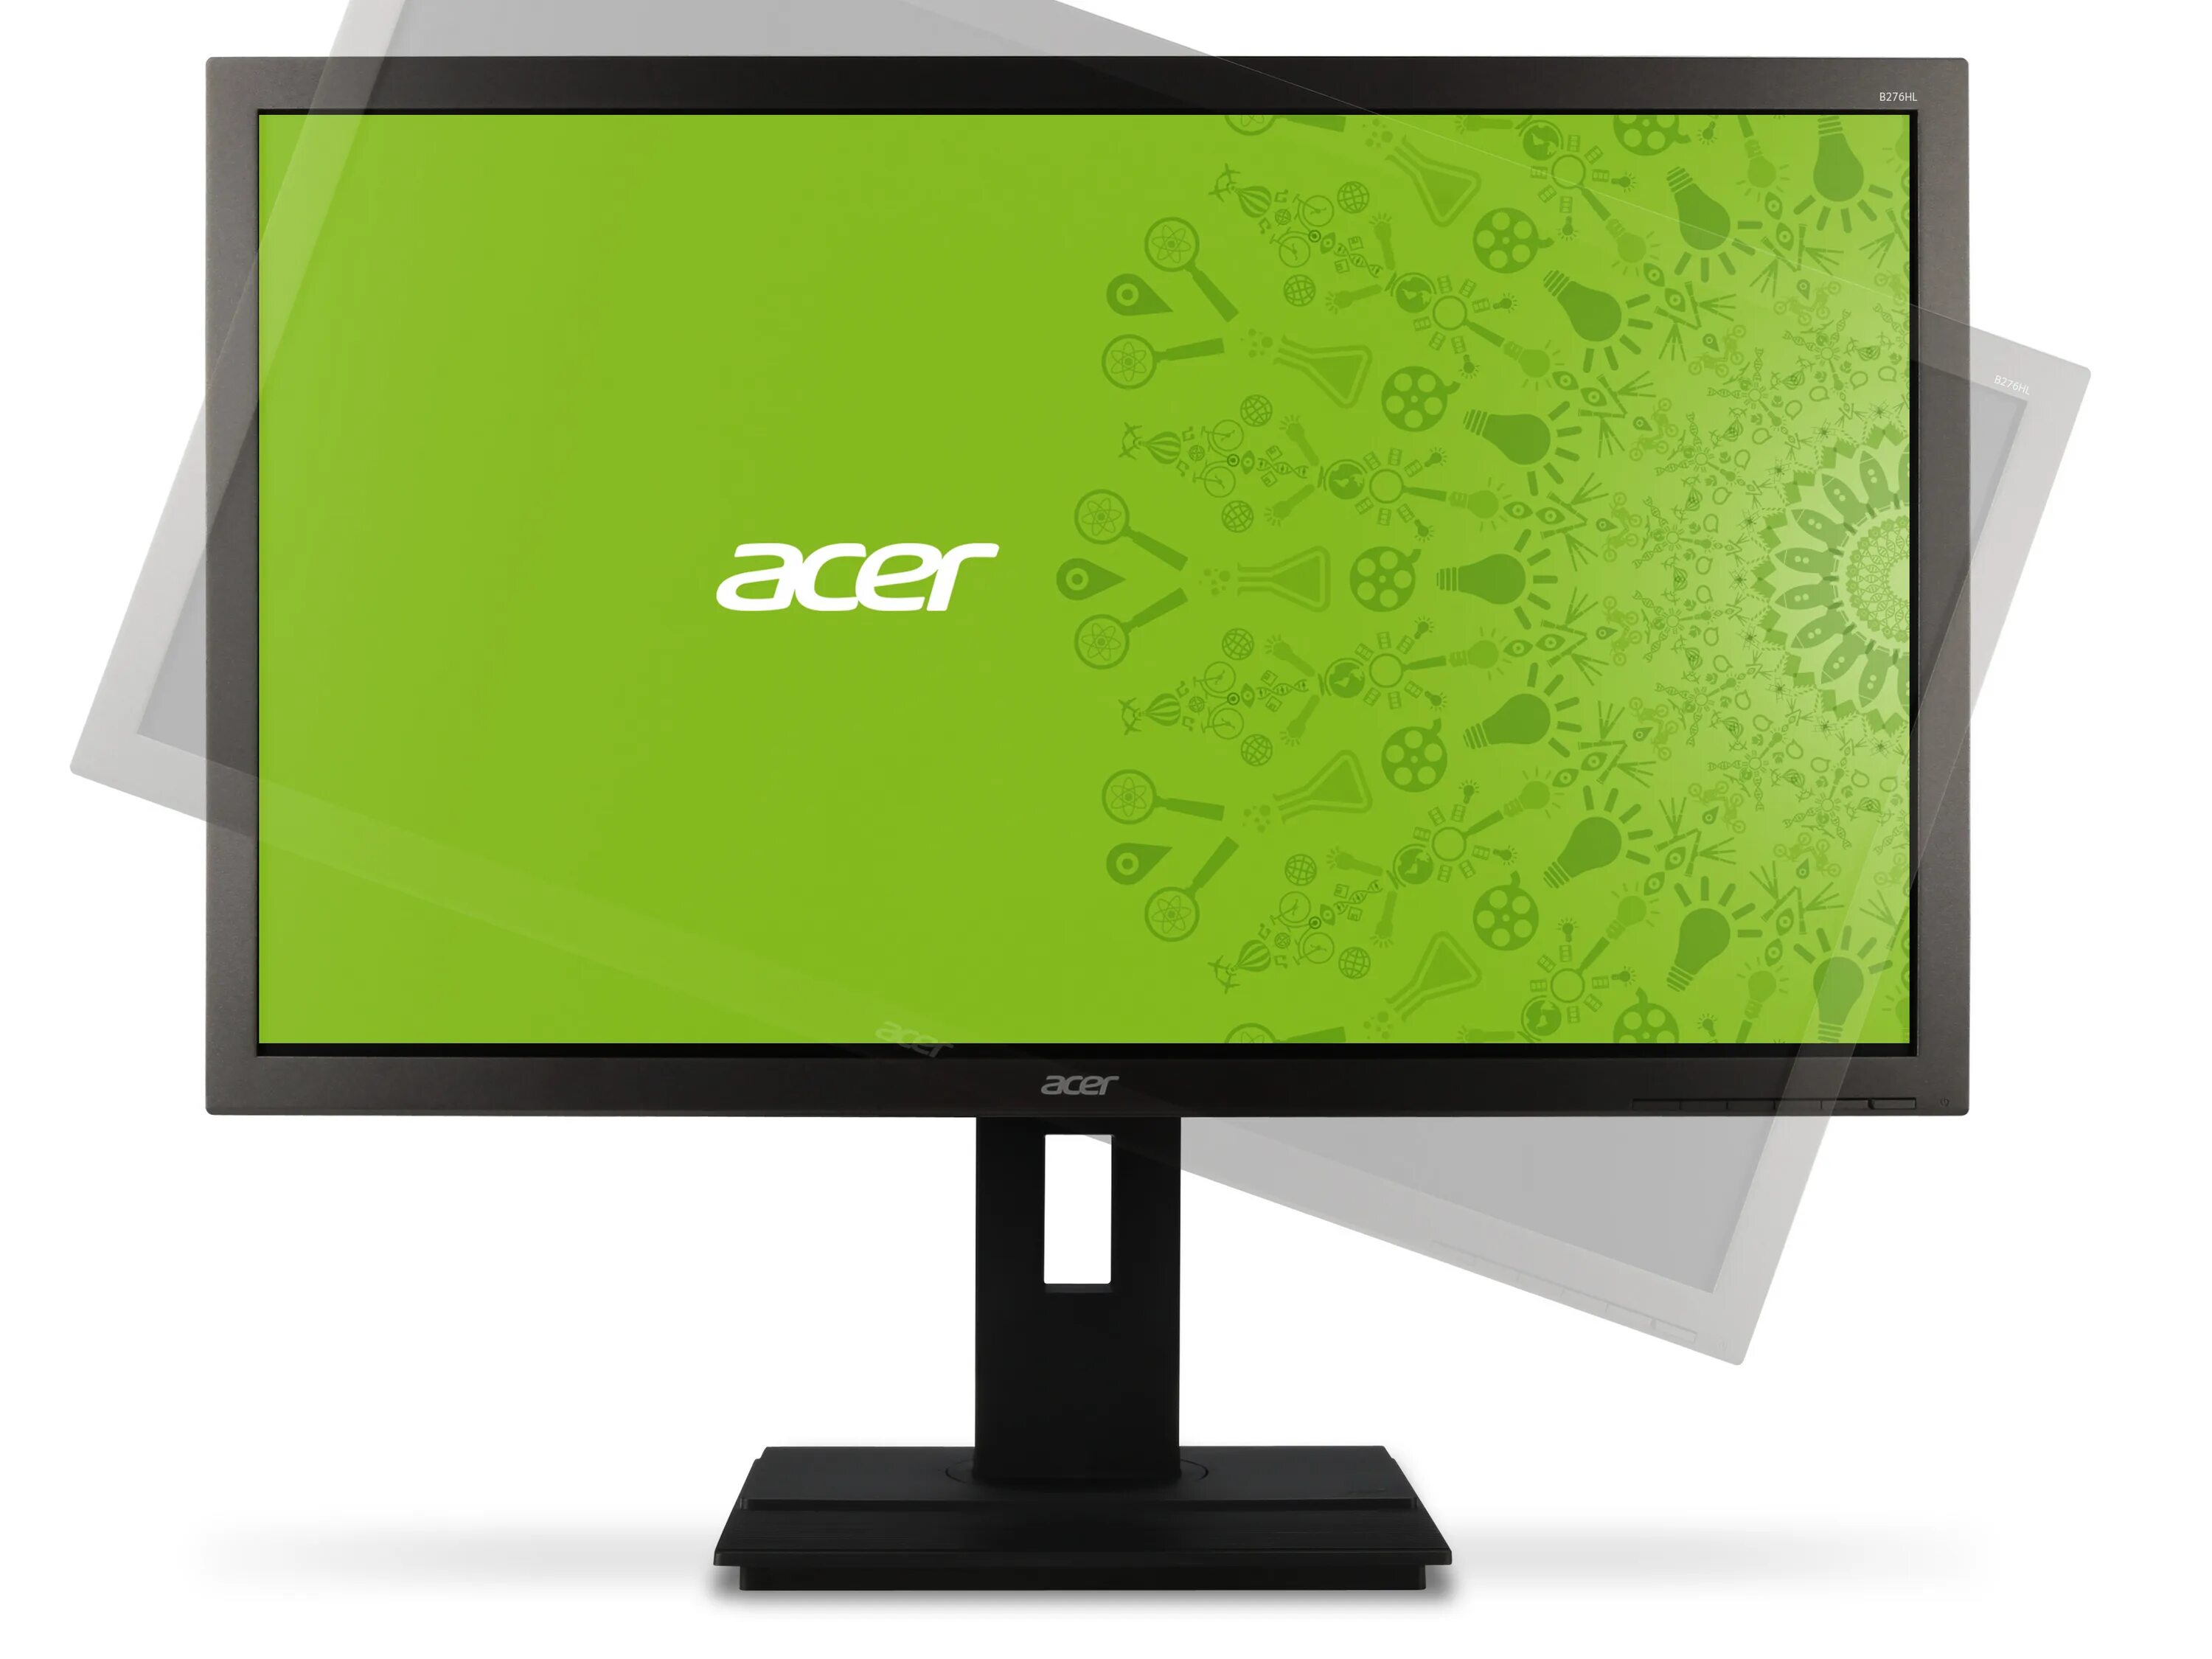 Acer b243. Монитор Acer b273hymidhz. Монитор 27" Acer b276. Acer 27 дюймов v243w.